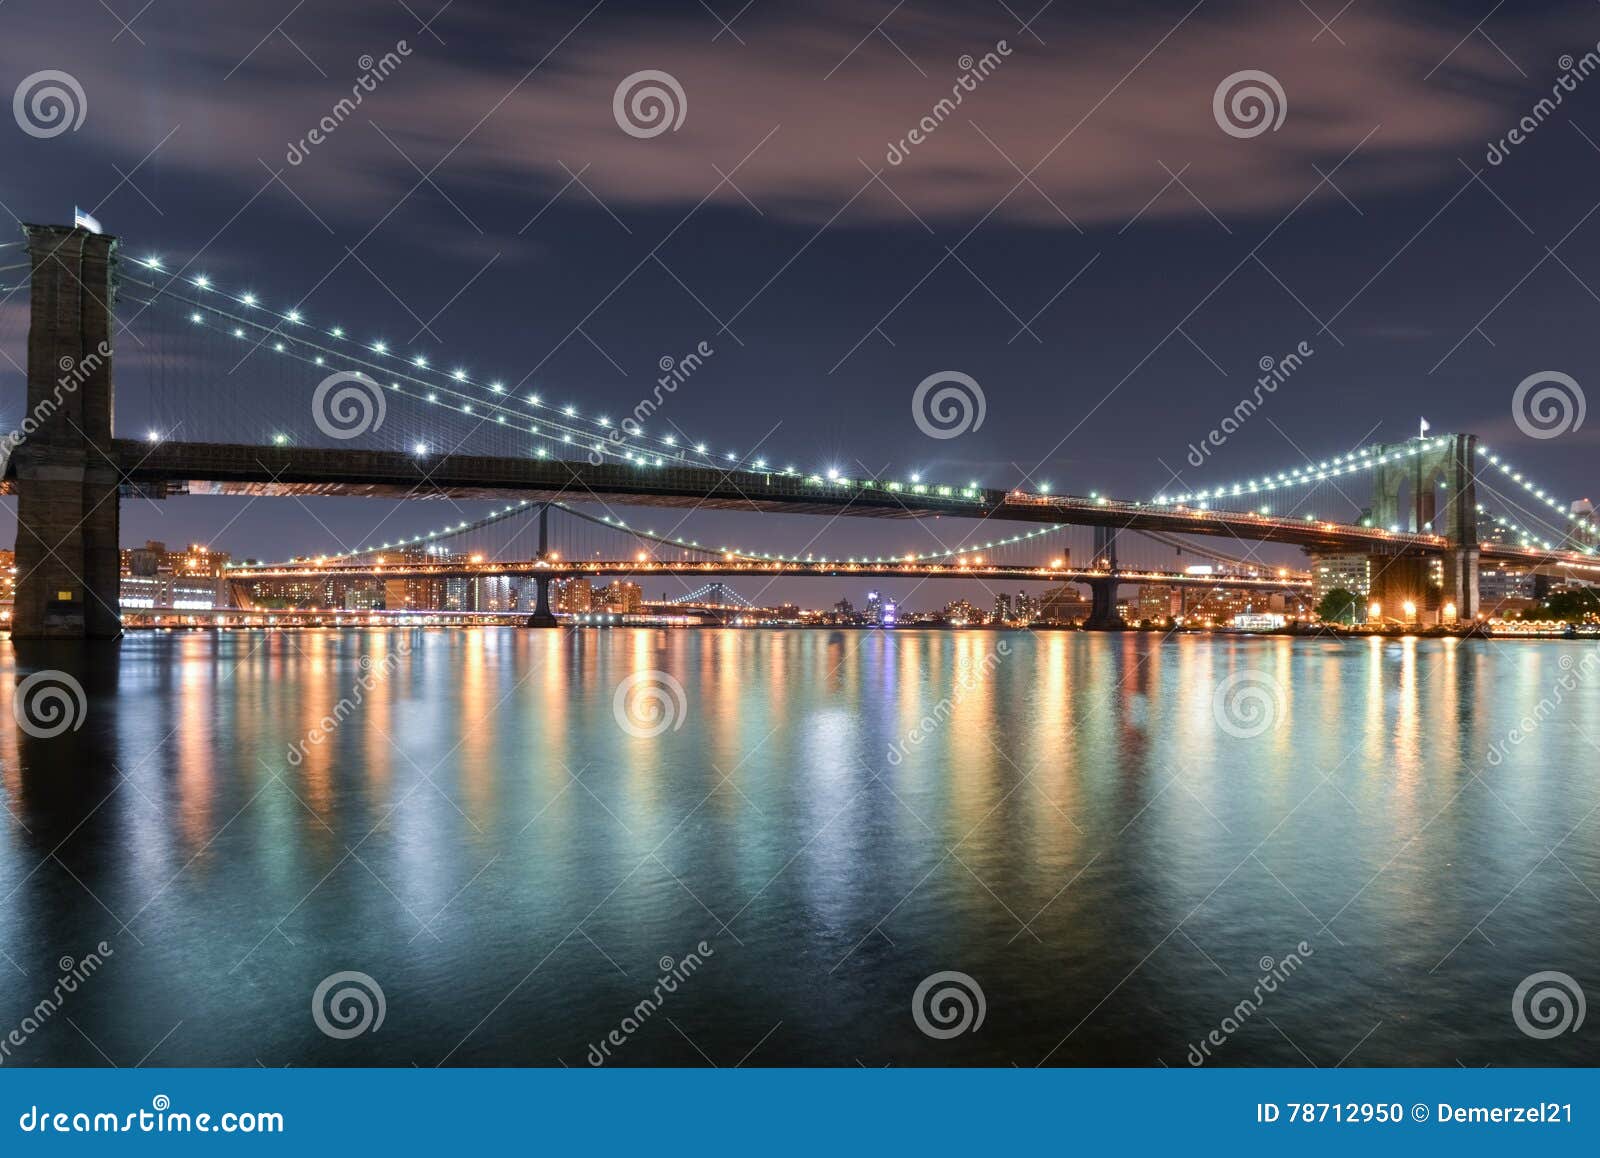 New York City Bridges stock photo. Image of south, night - 78712950